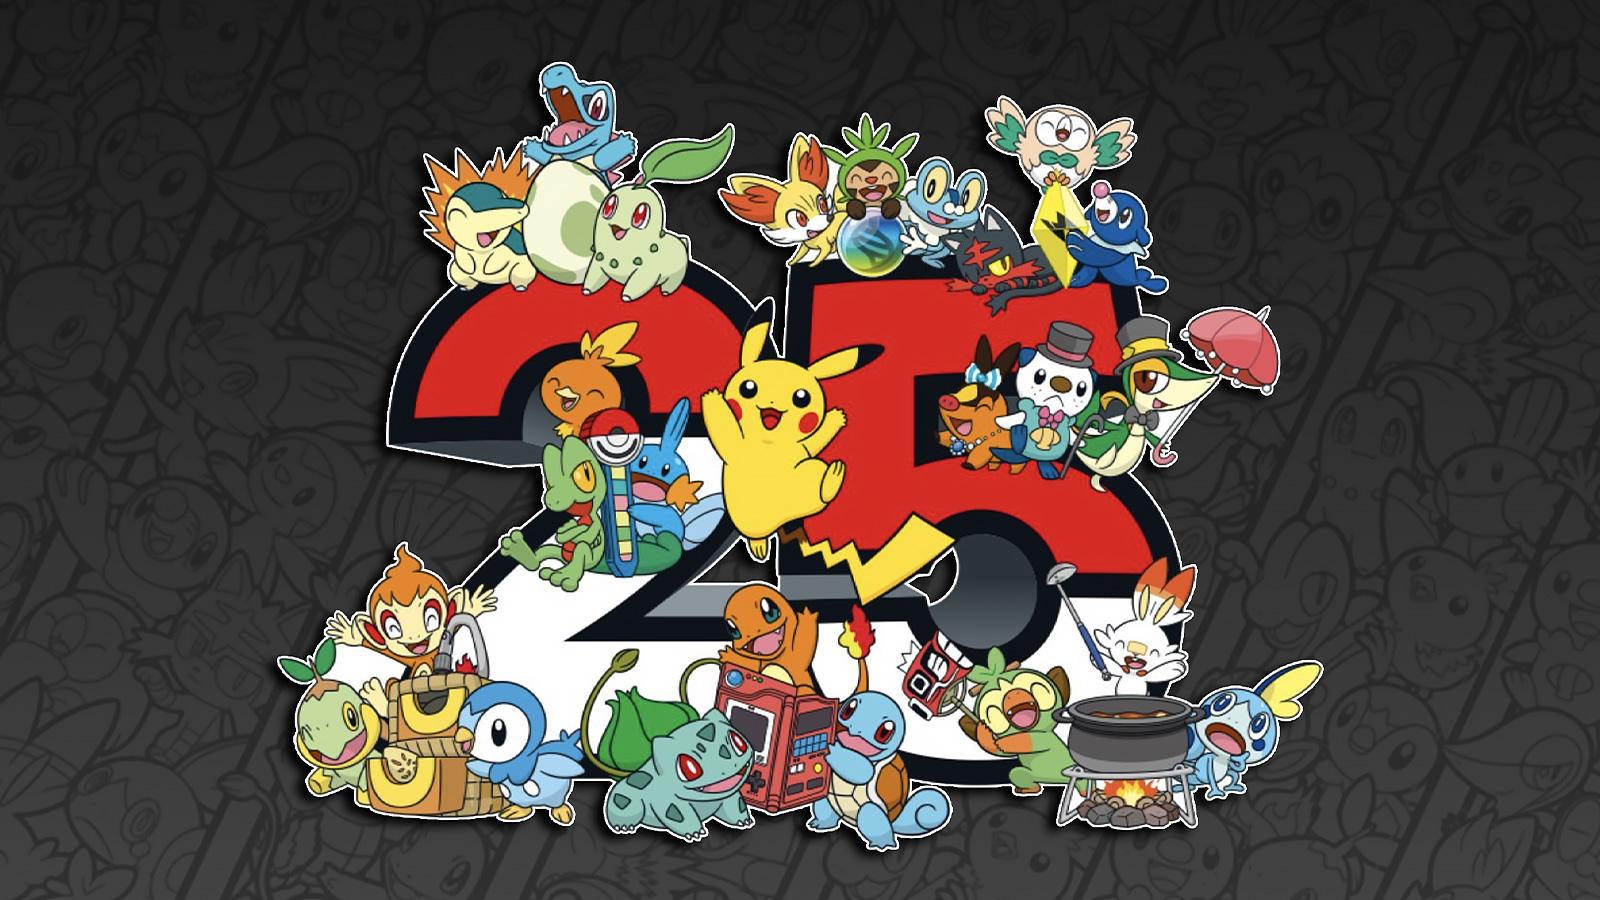 Screenshot of Pokemon 25th Anniversary promotion.